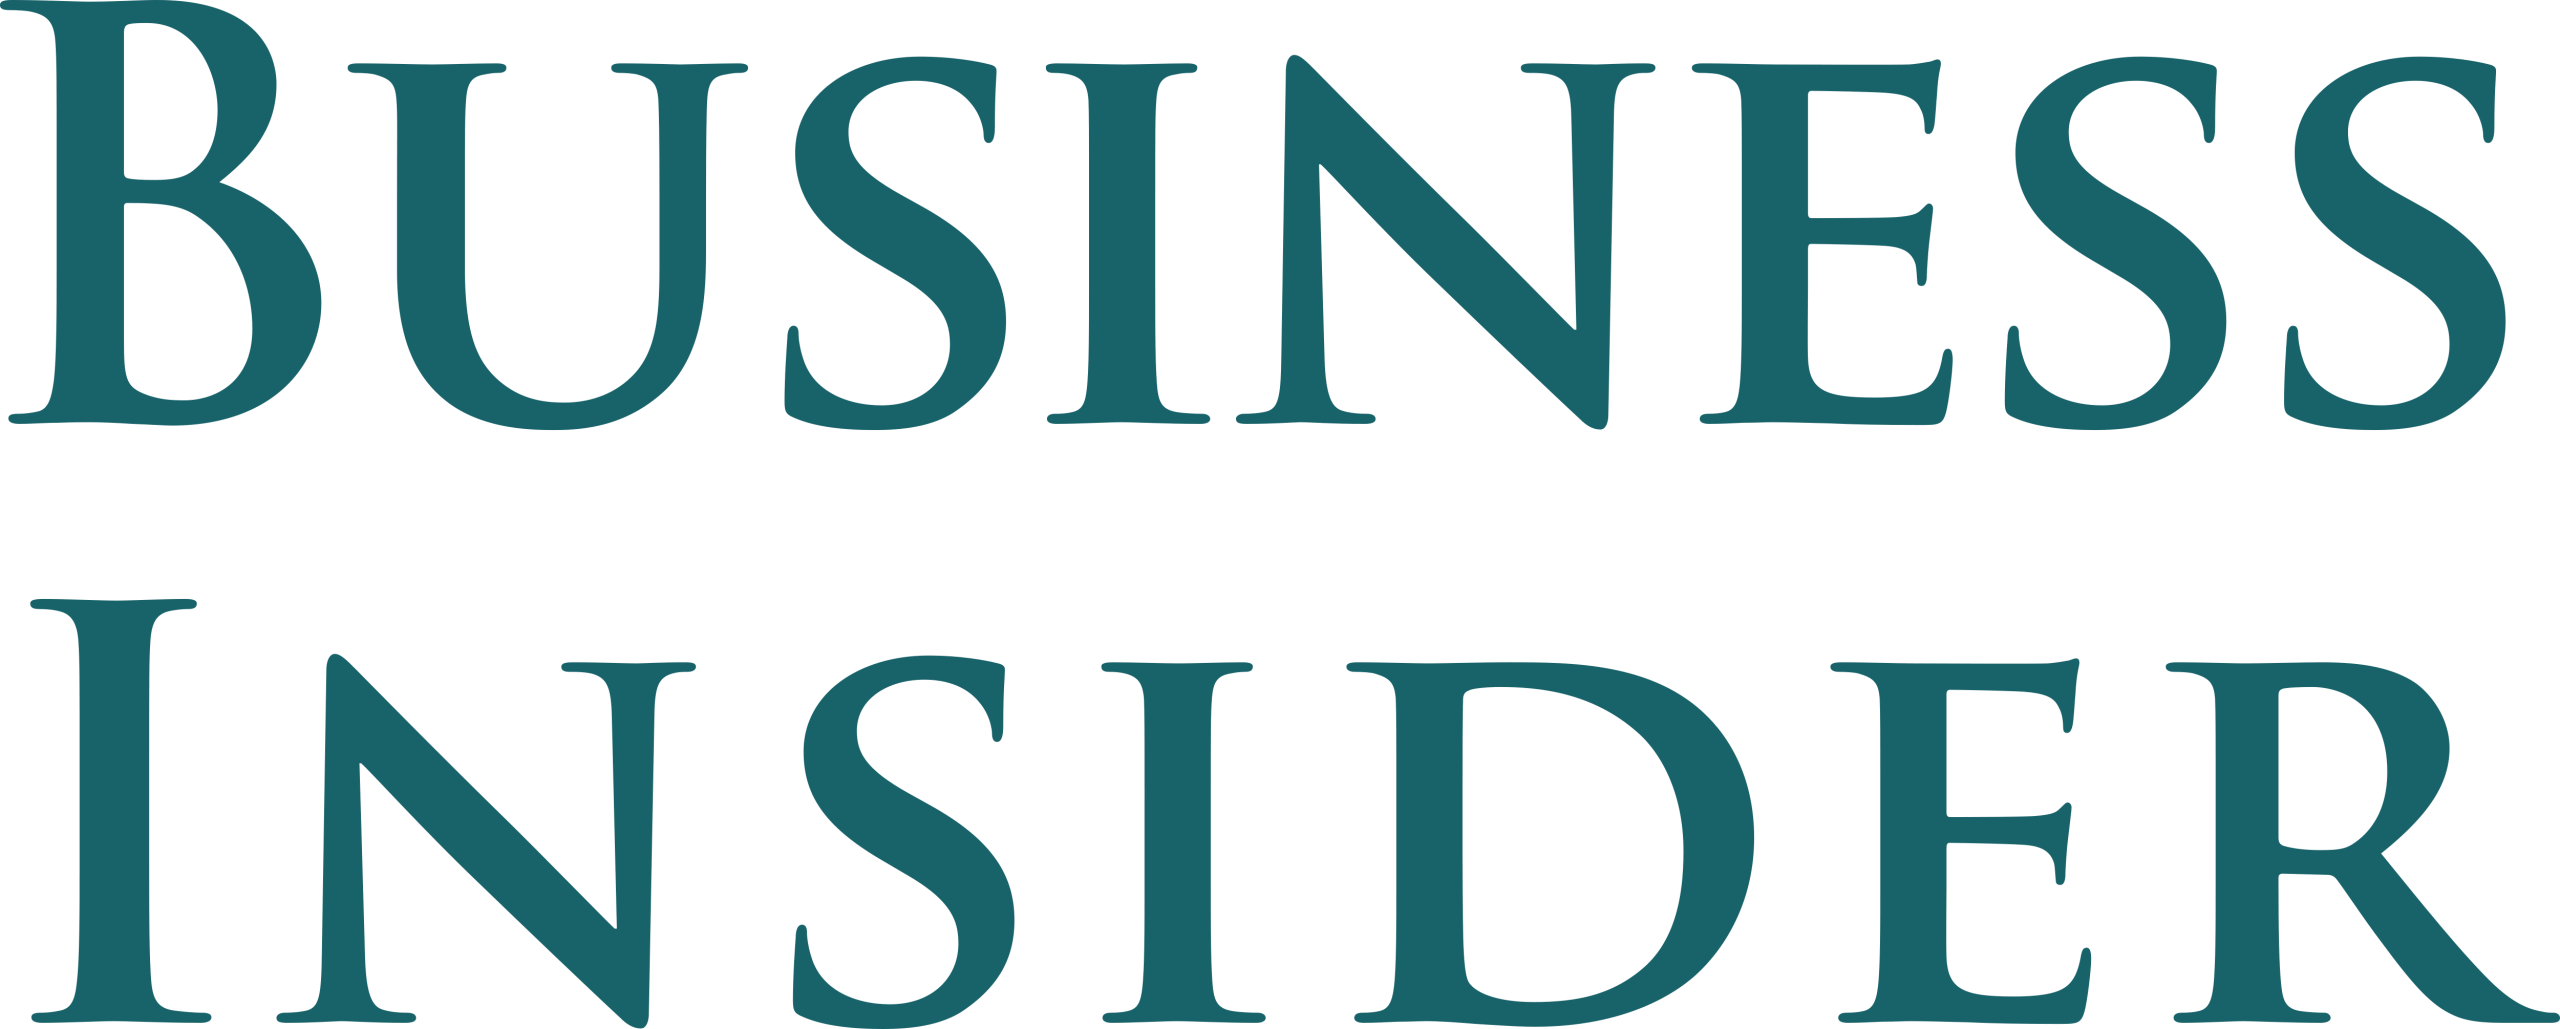 https://celinnedacosta.com/wp-content/uploads/2019/11/Business_Insider_Logo-scaled.png